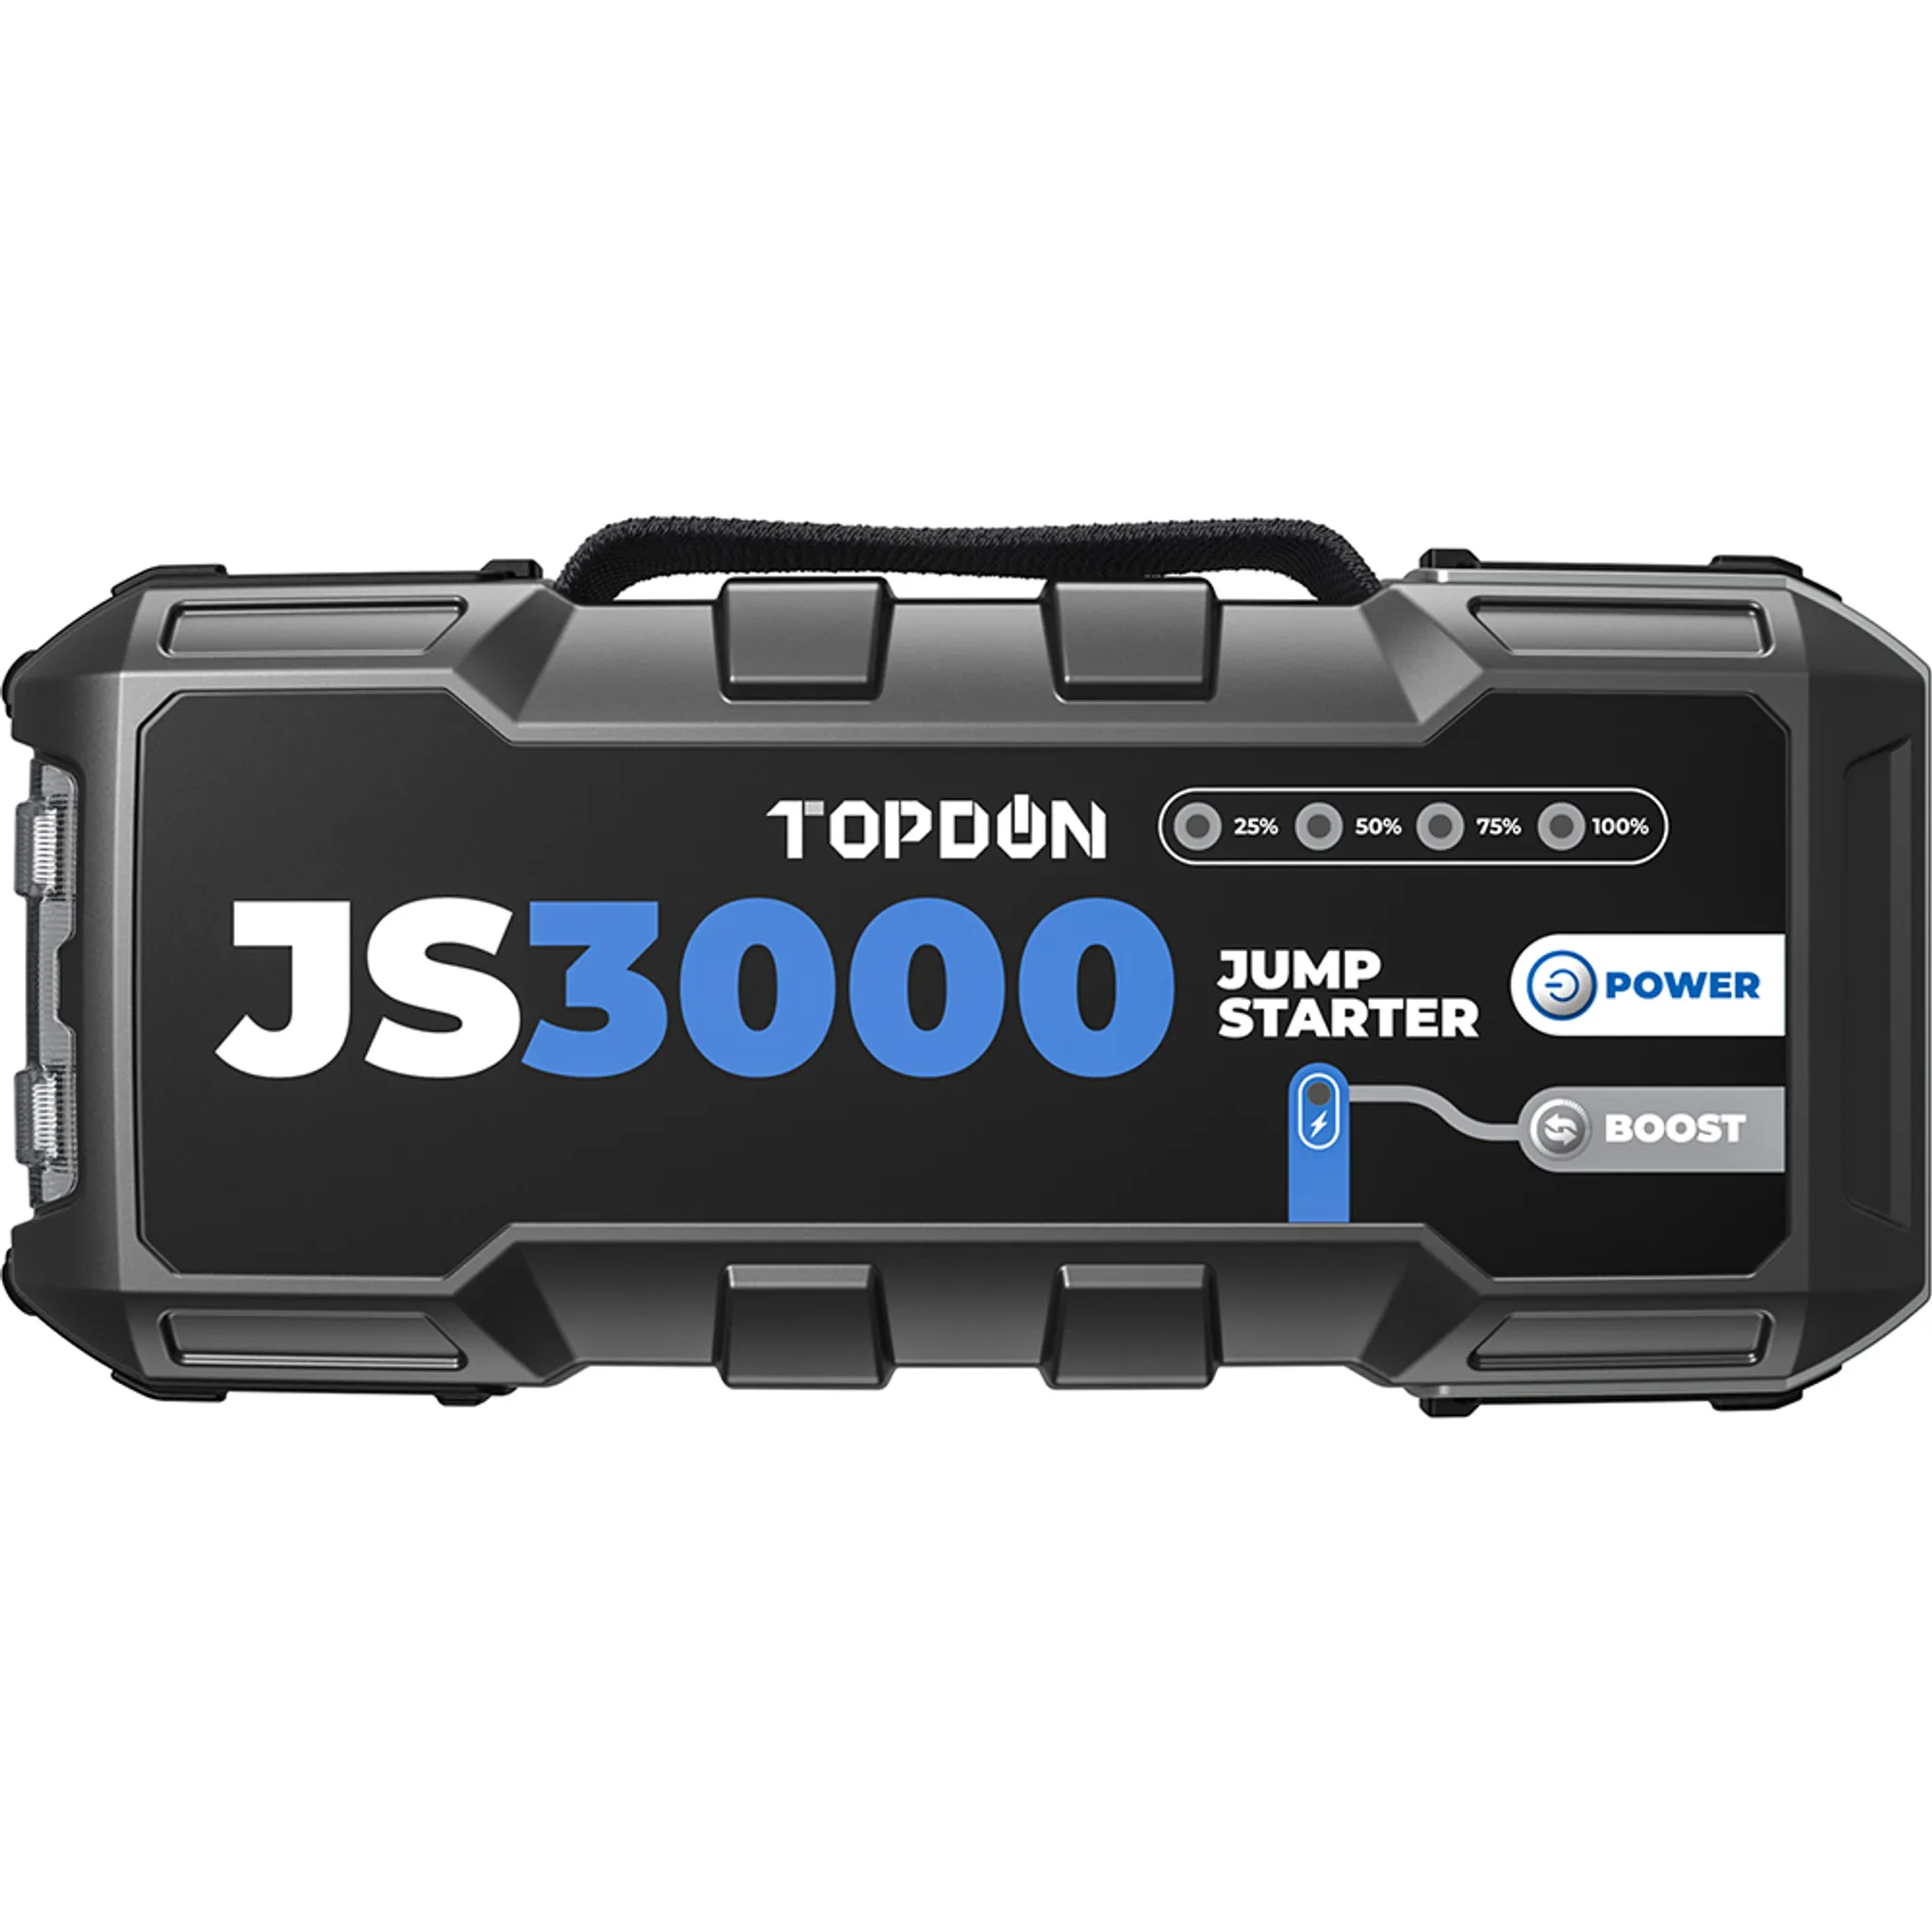 TOPDON JS3000 Auto KFZ Starthilfe Booster Powerbank Jump Starter 24000mAh  9LGas